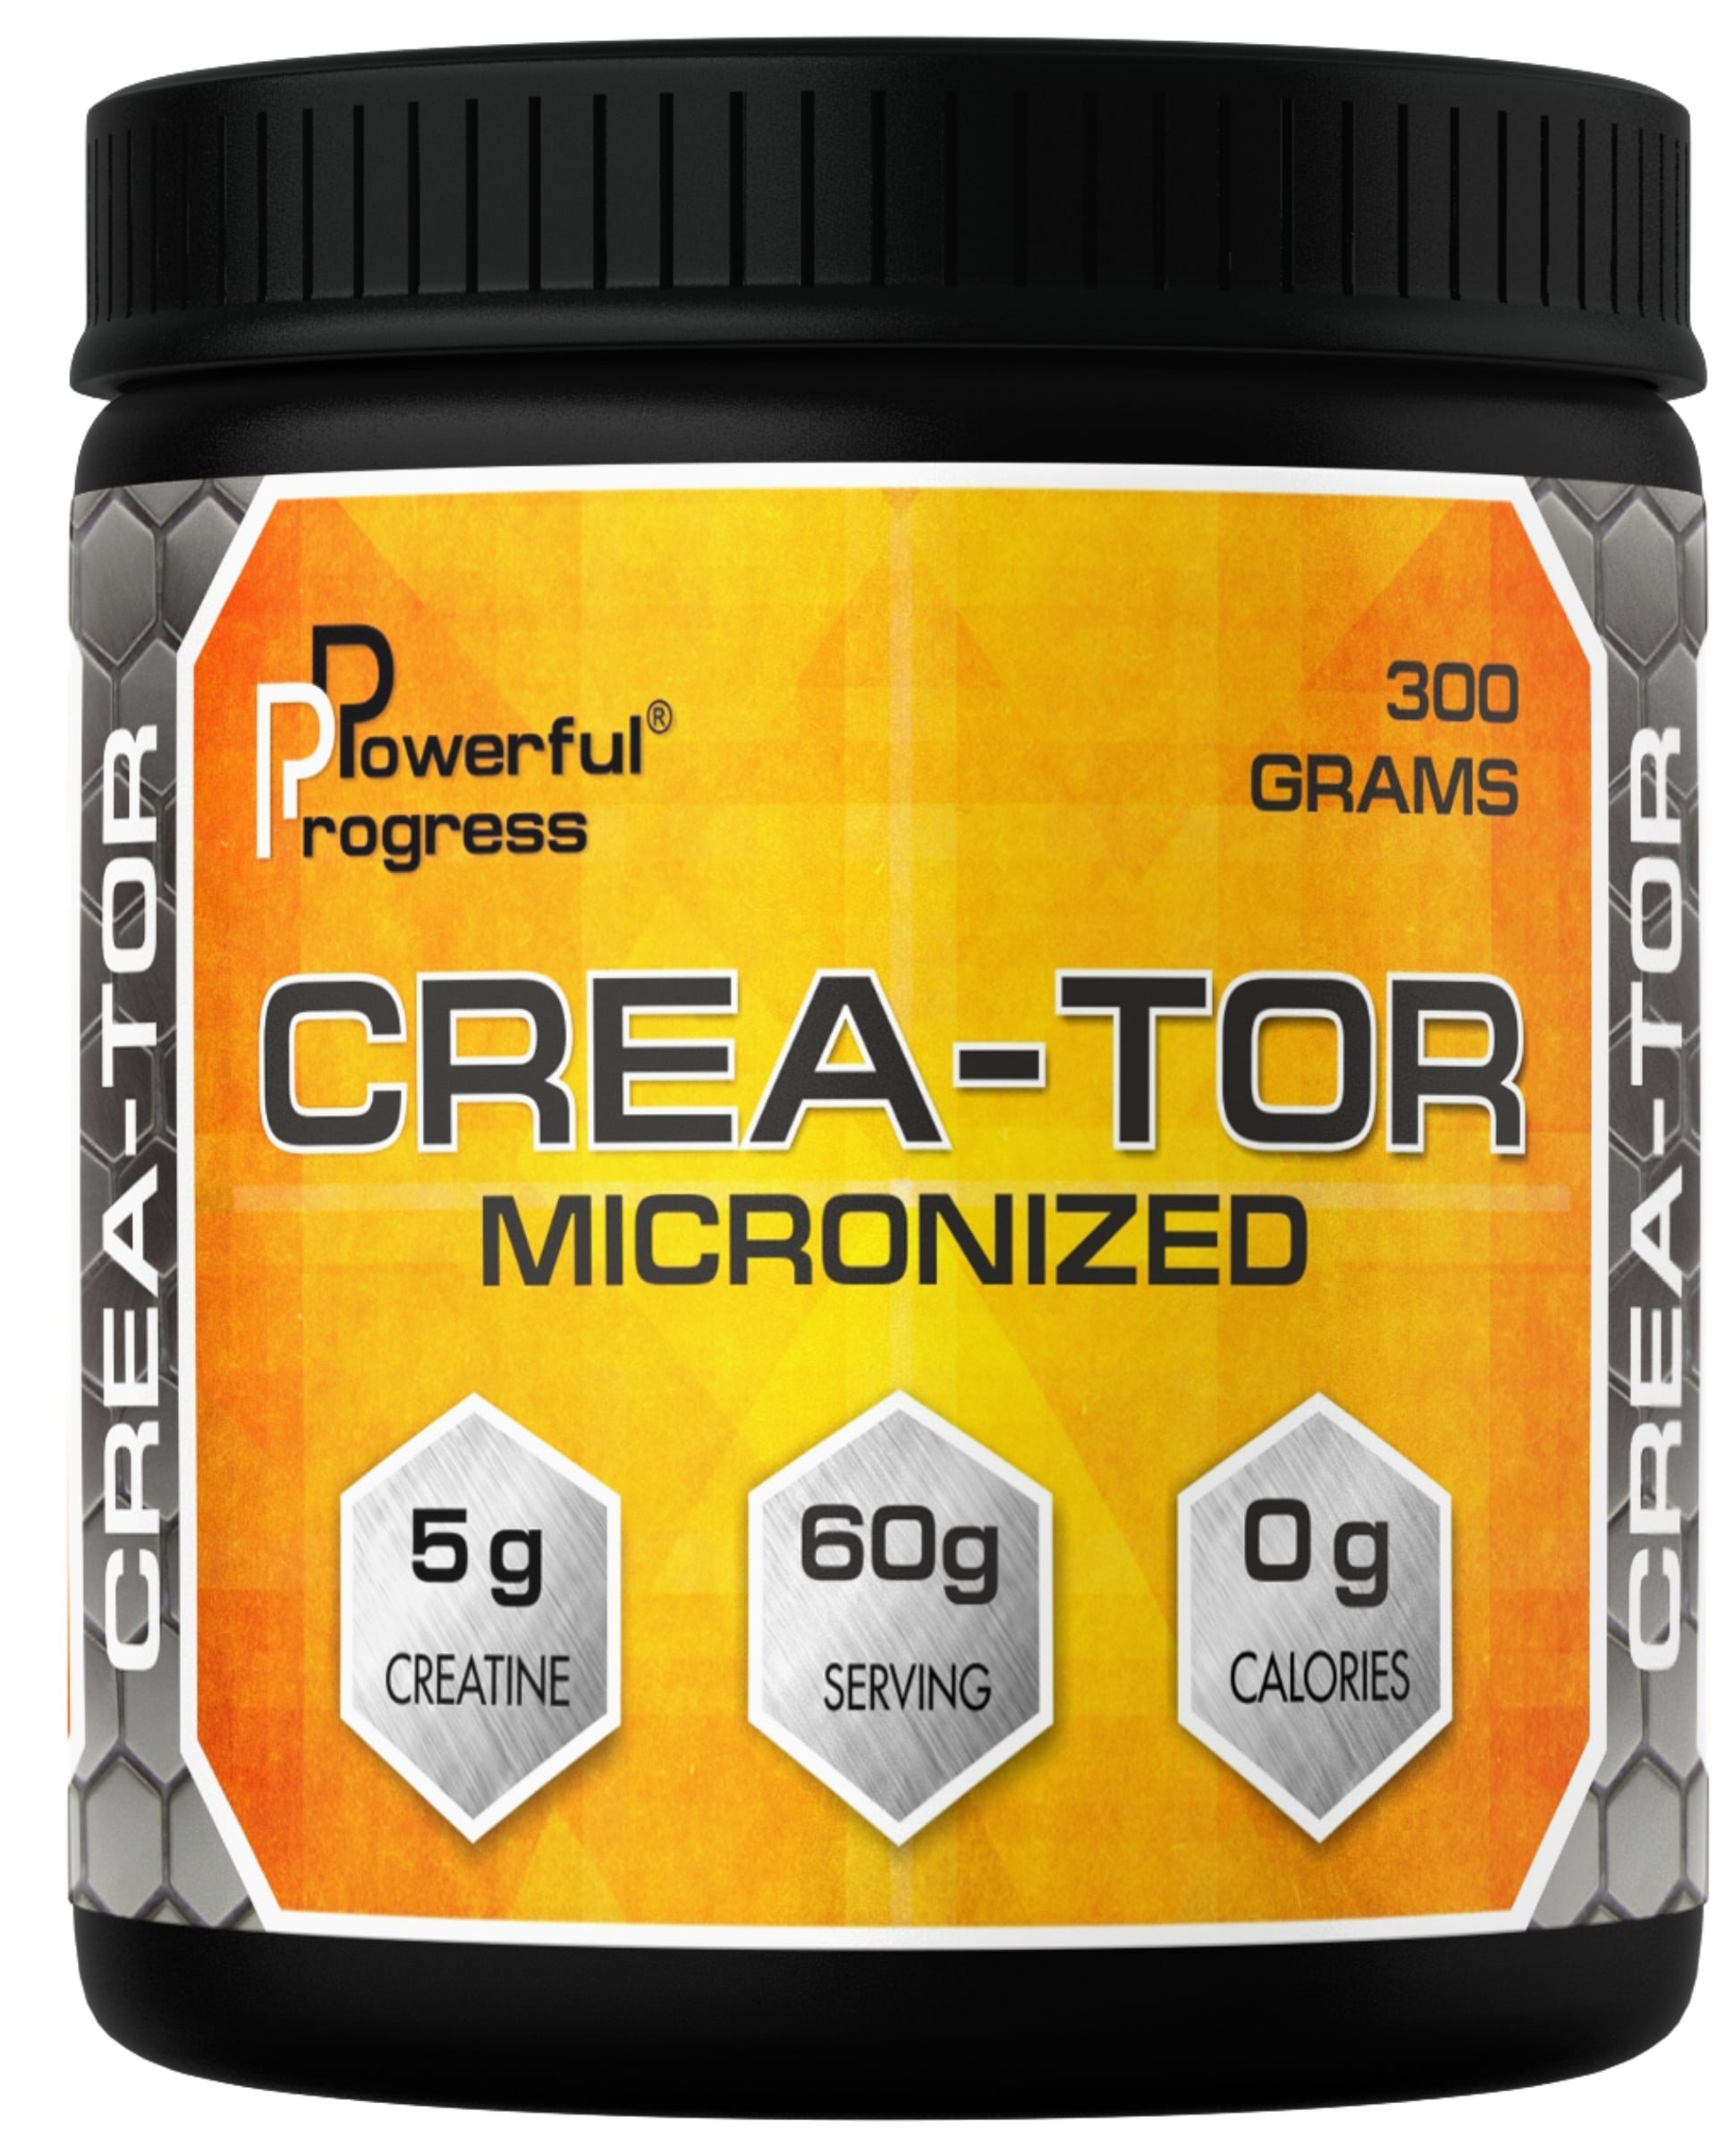 Crea-Tor Micronized, 300 gr, Powerful Progress. Creatine monohydrate. Mass Gain Energy & Endurance Strength enhancement 